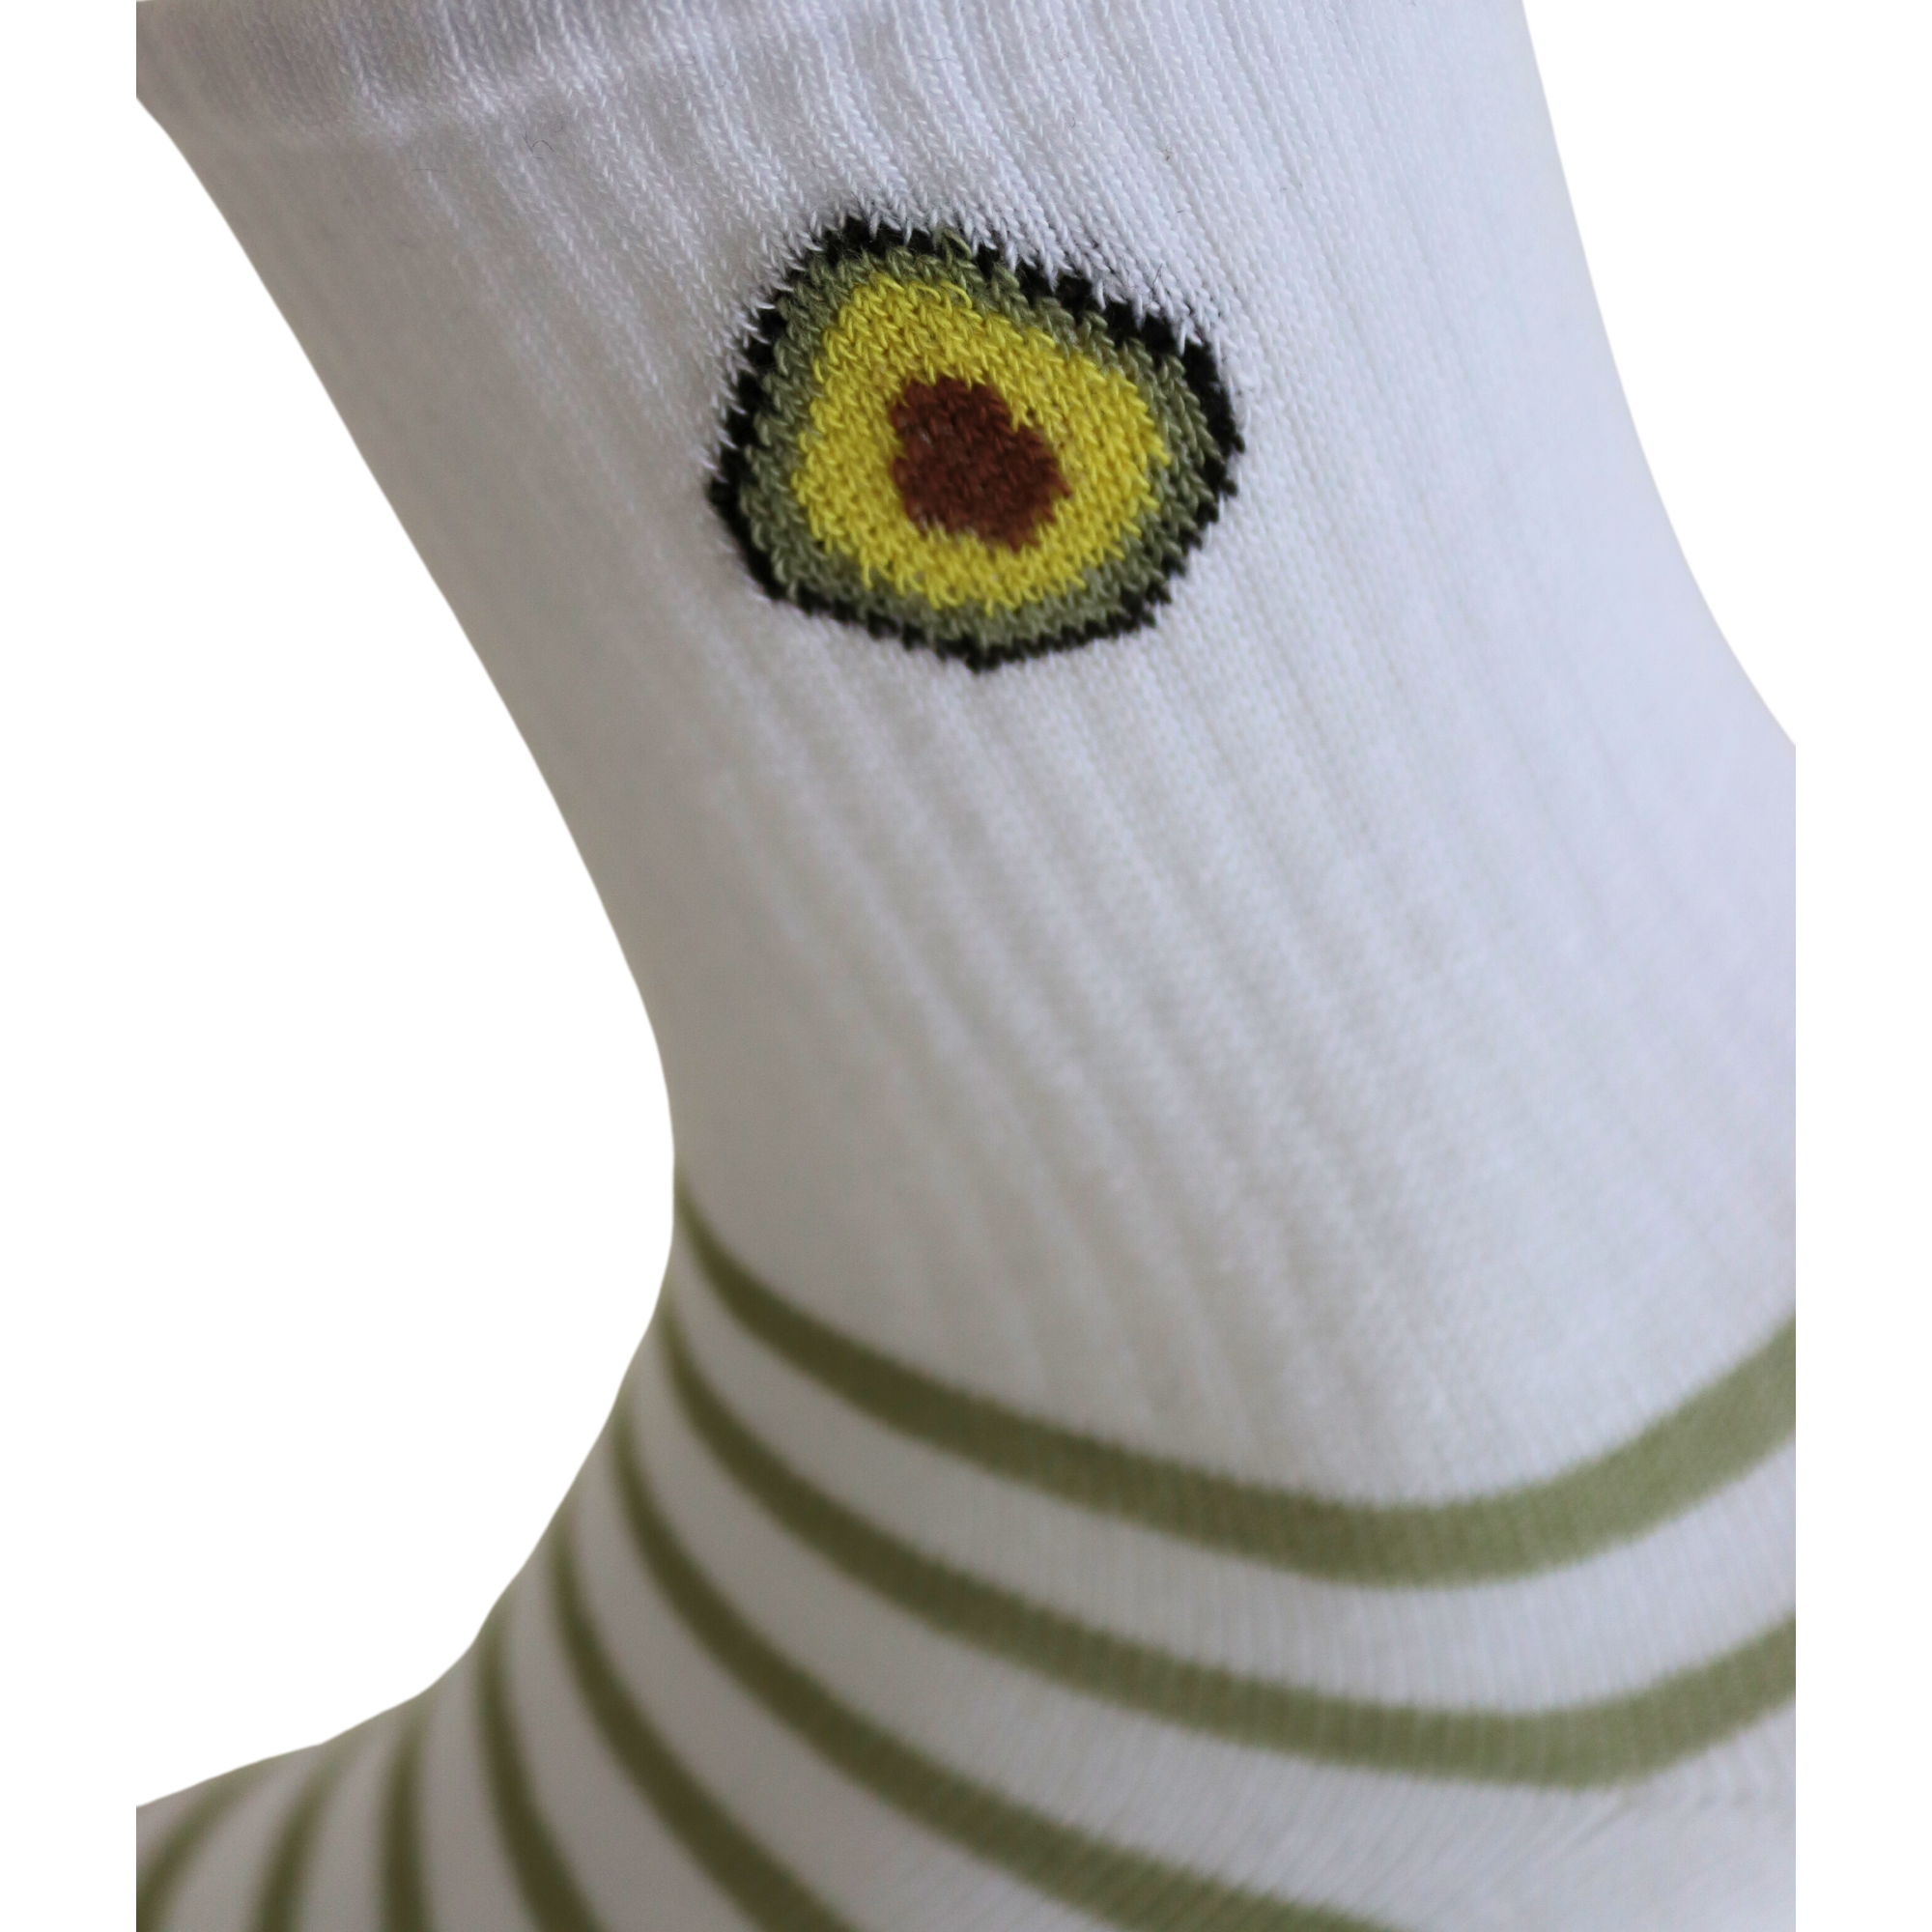 Louluu Women Avocado White-Green Stripe Colour Tennis Socks